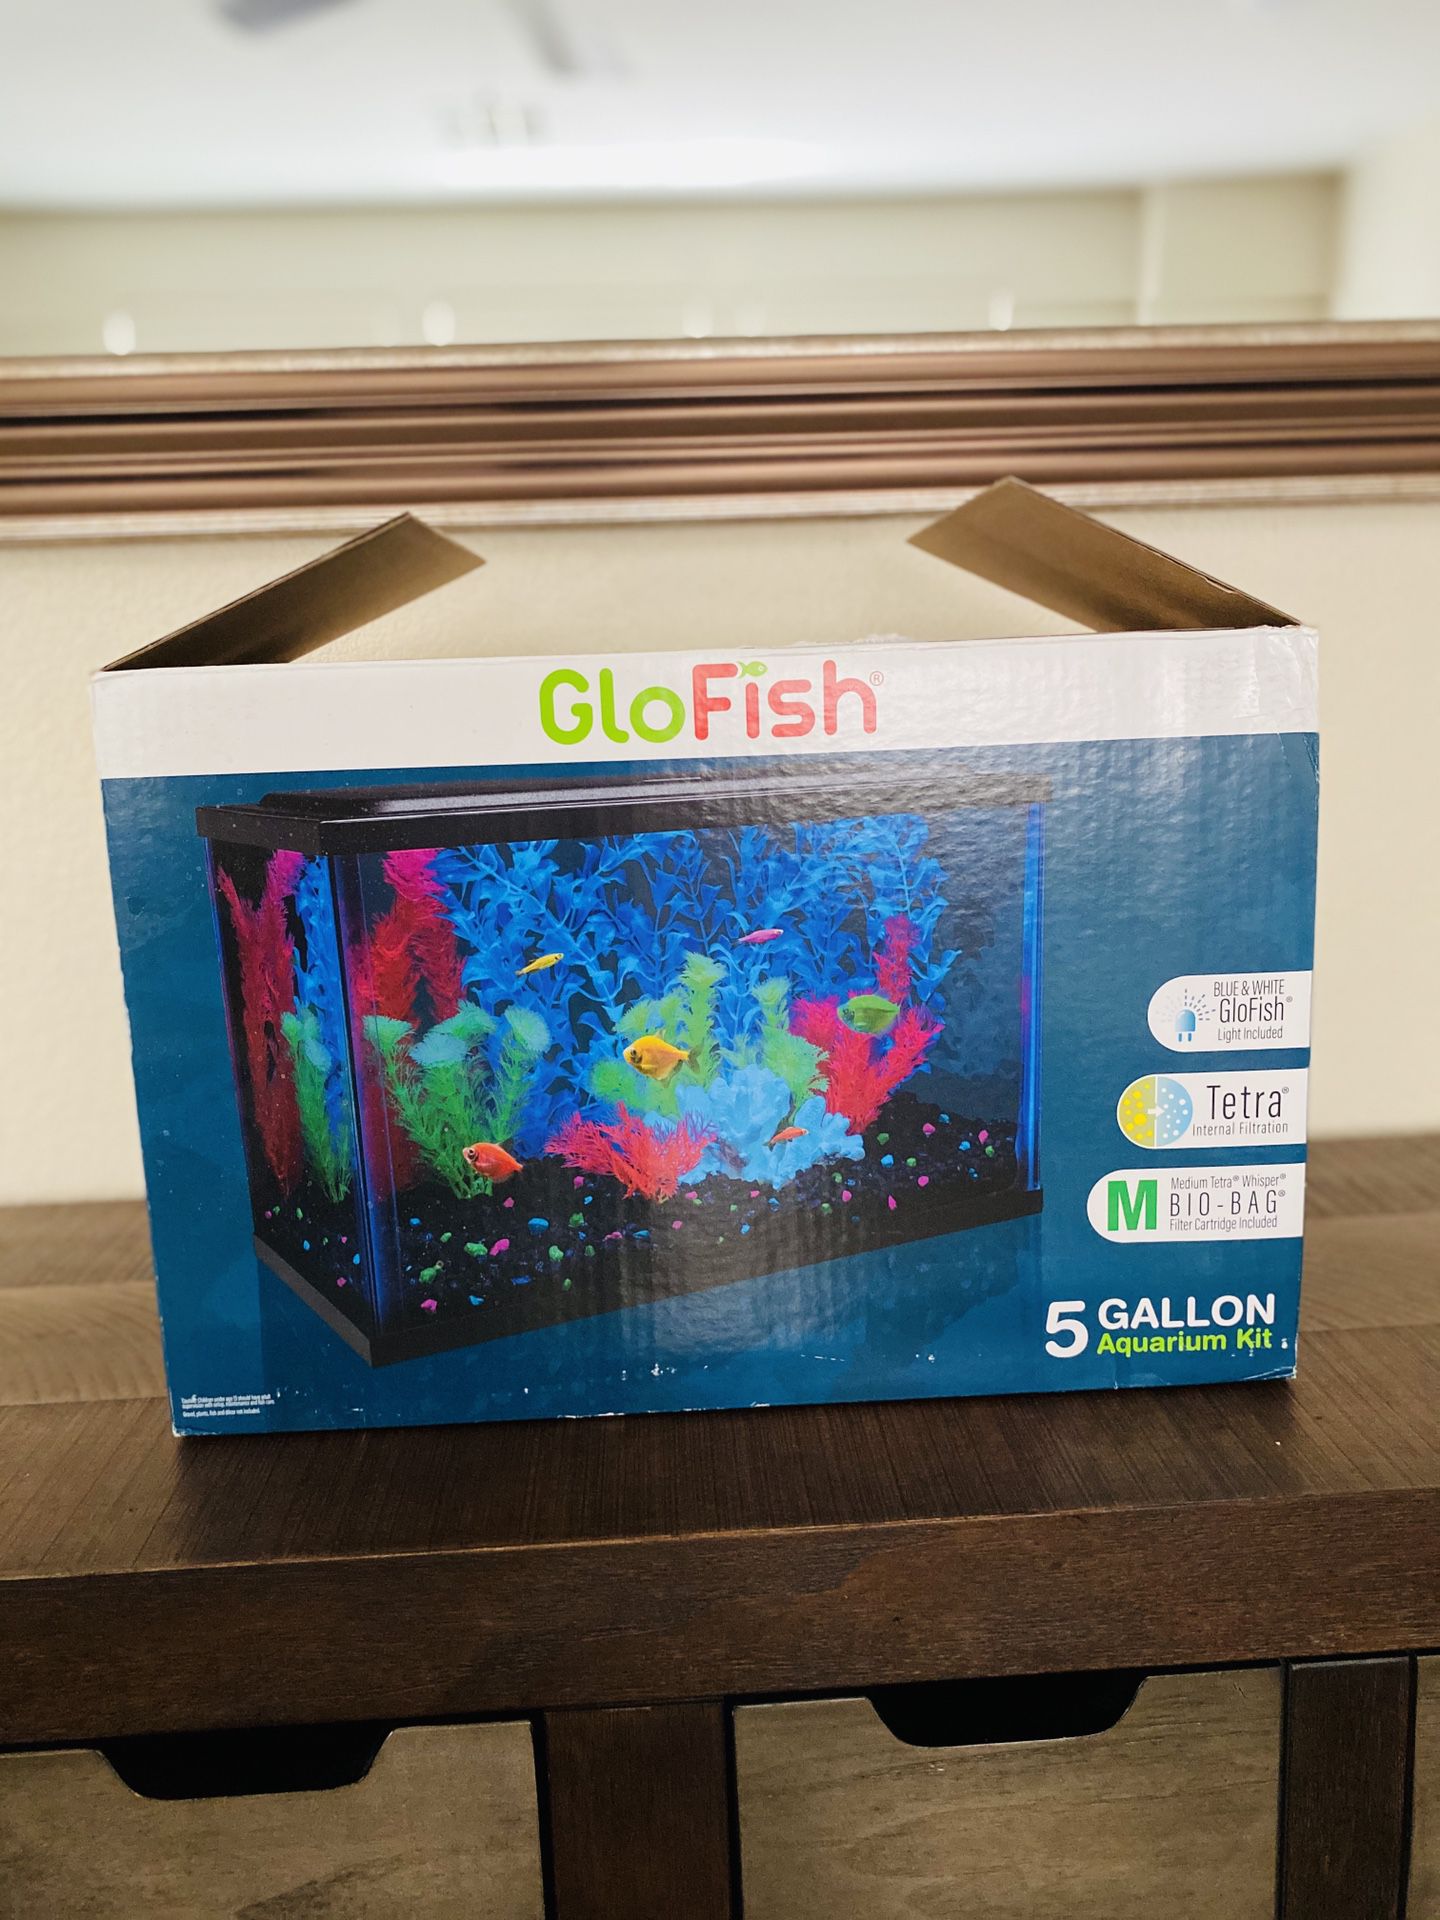 New open box glow fish 5 gallon aquarium kit